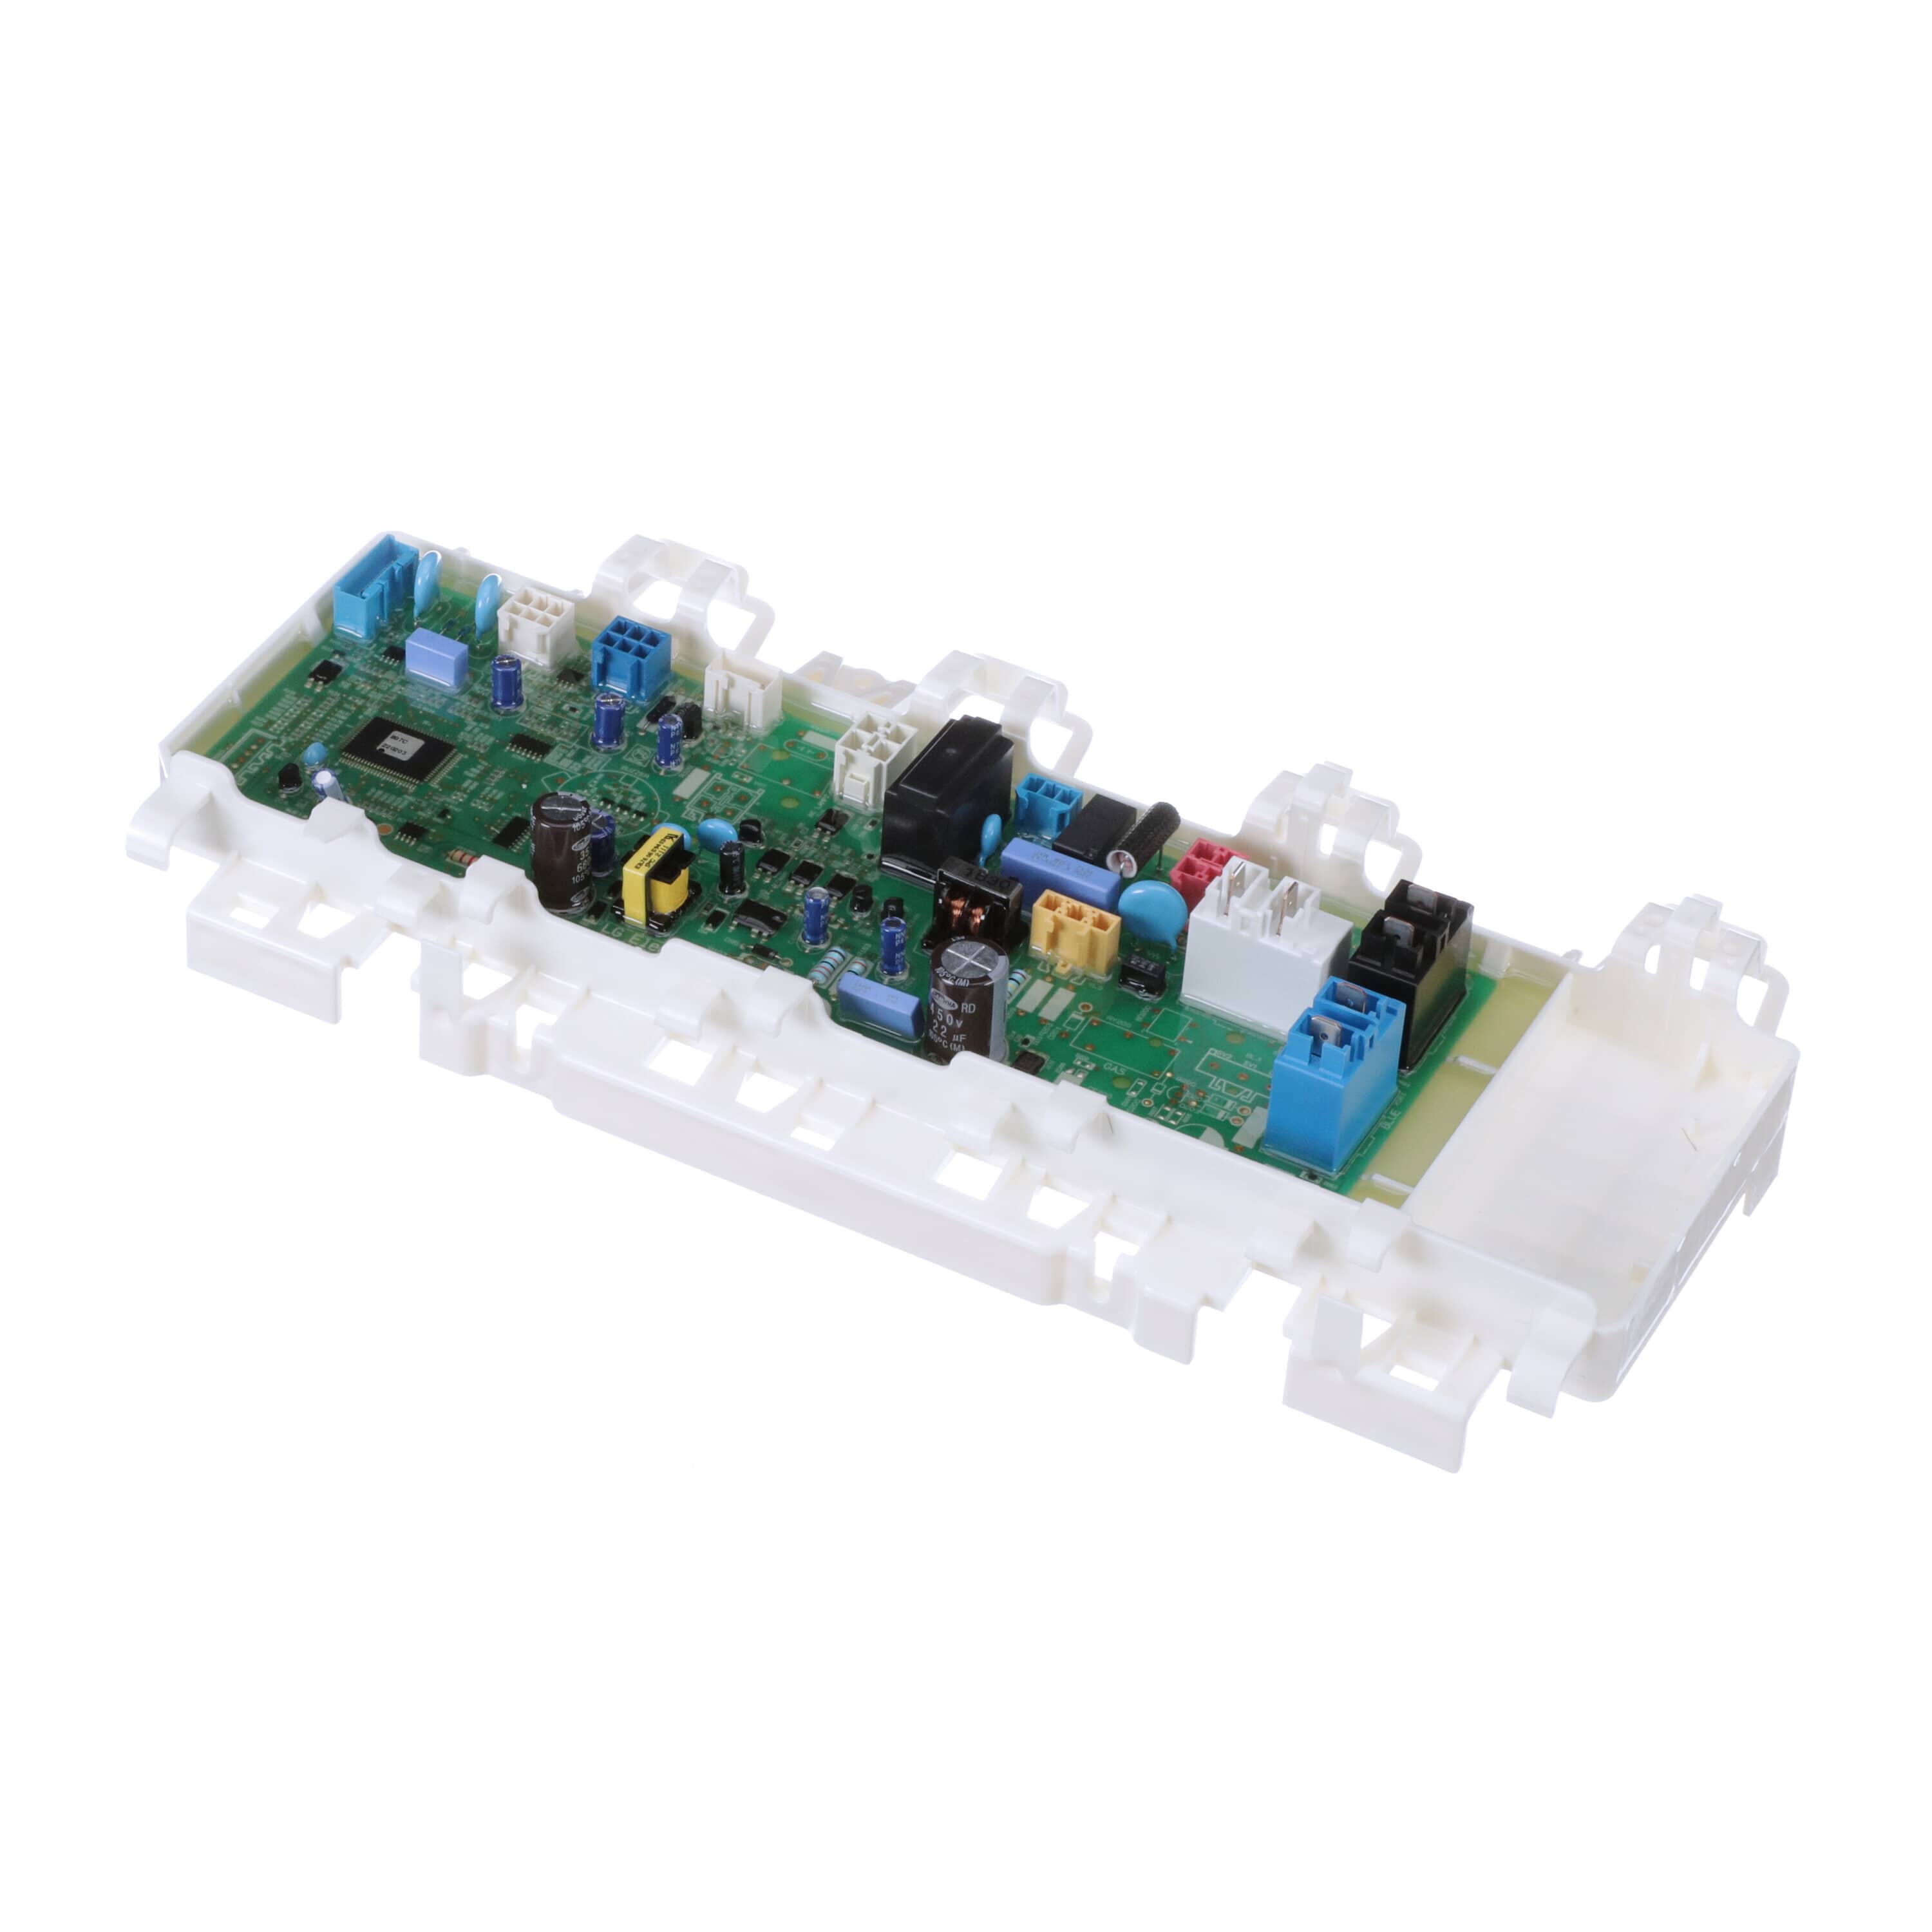 LG EBR76542917 Dryer Main Electronic Control Board (PCB) Assembly